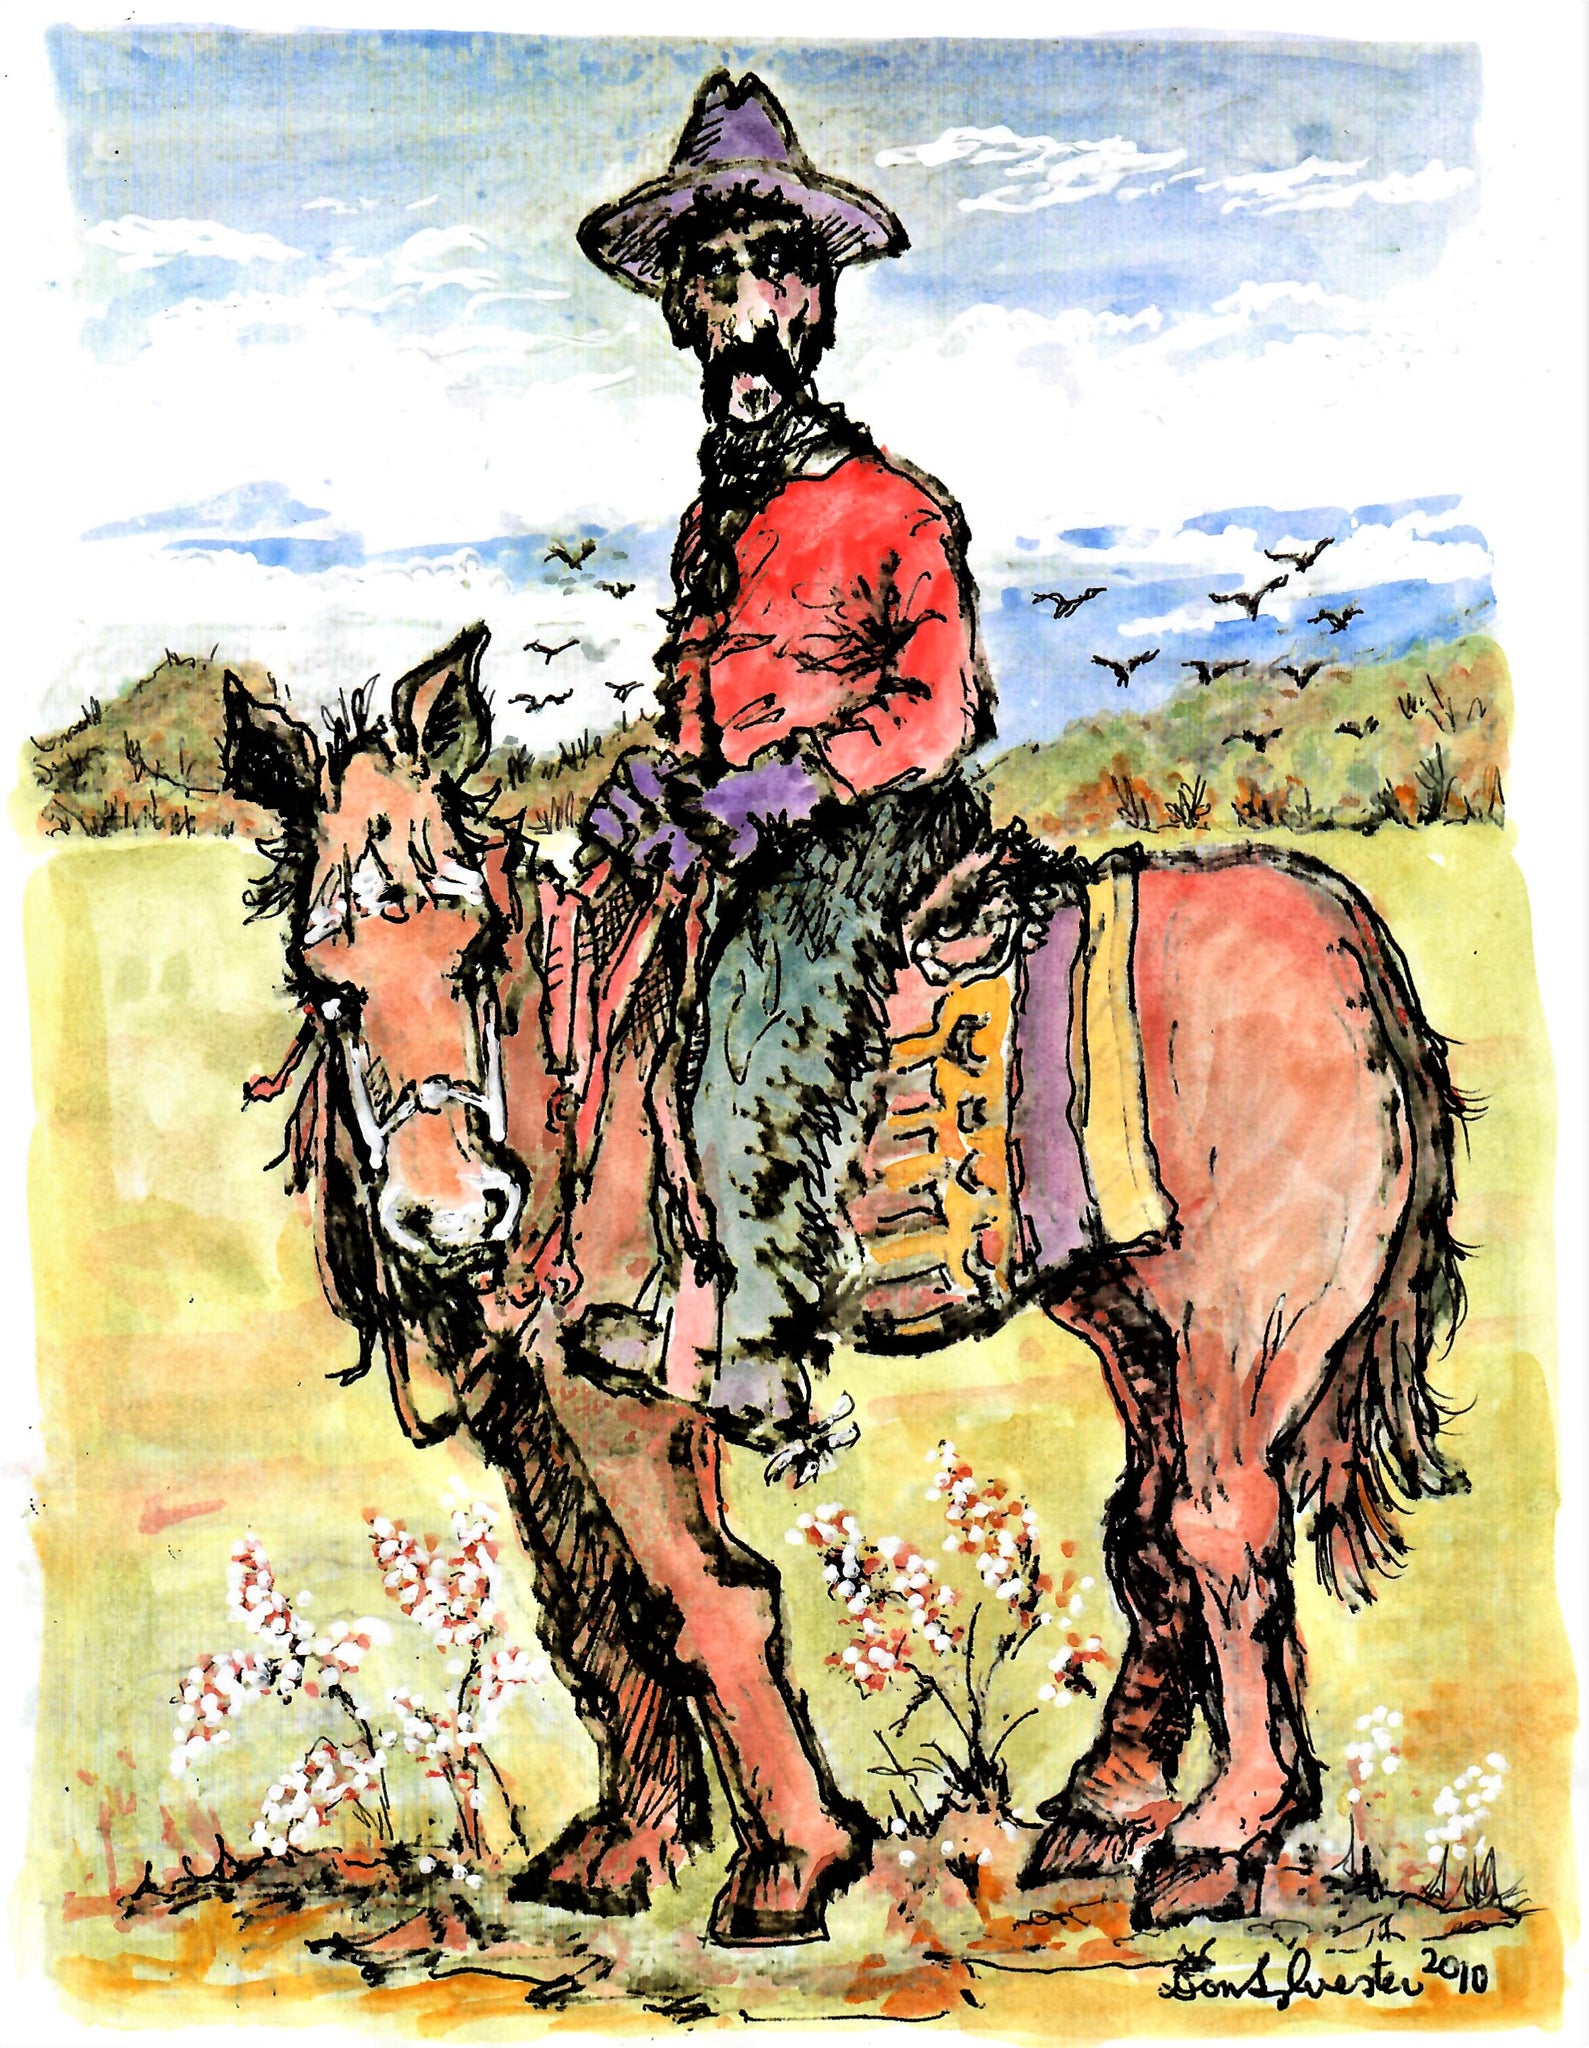 WESTERN - COWBOY AND HORSE NEAR A MOUNTAIN RANGE